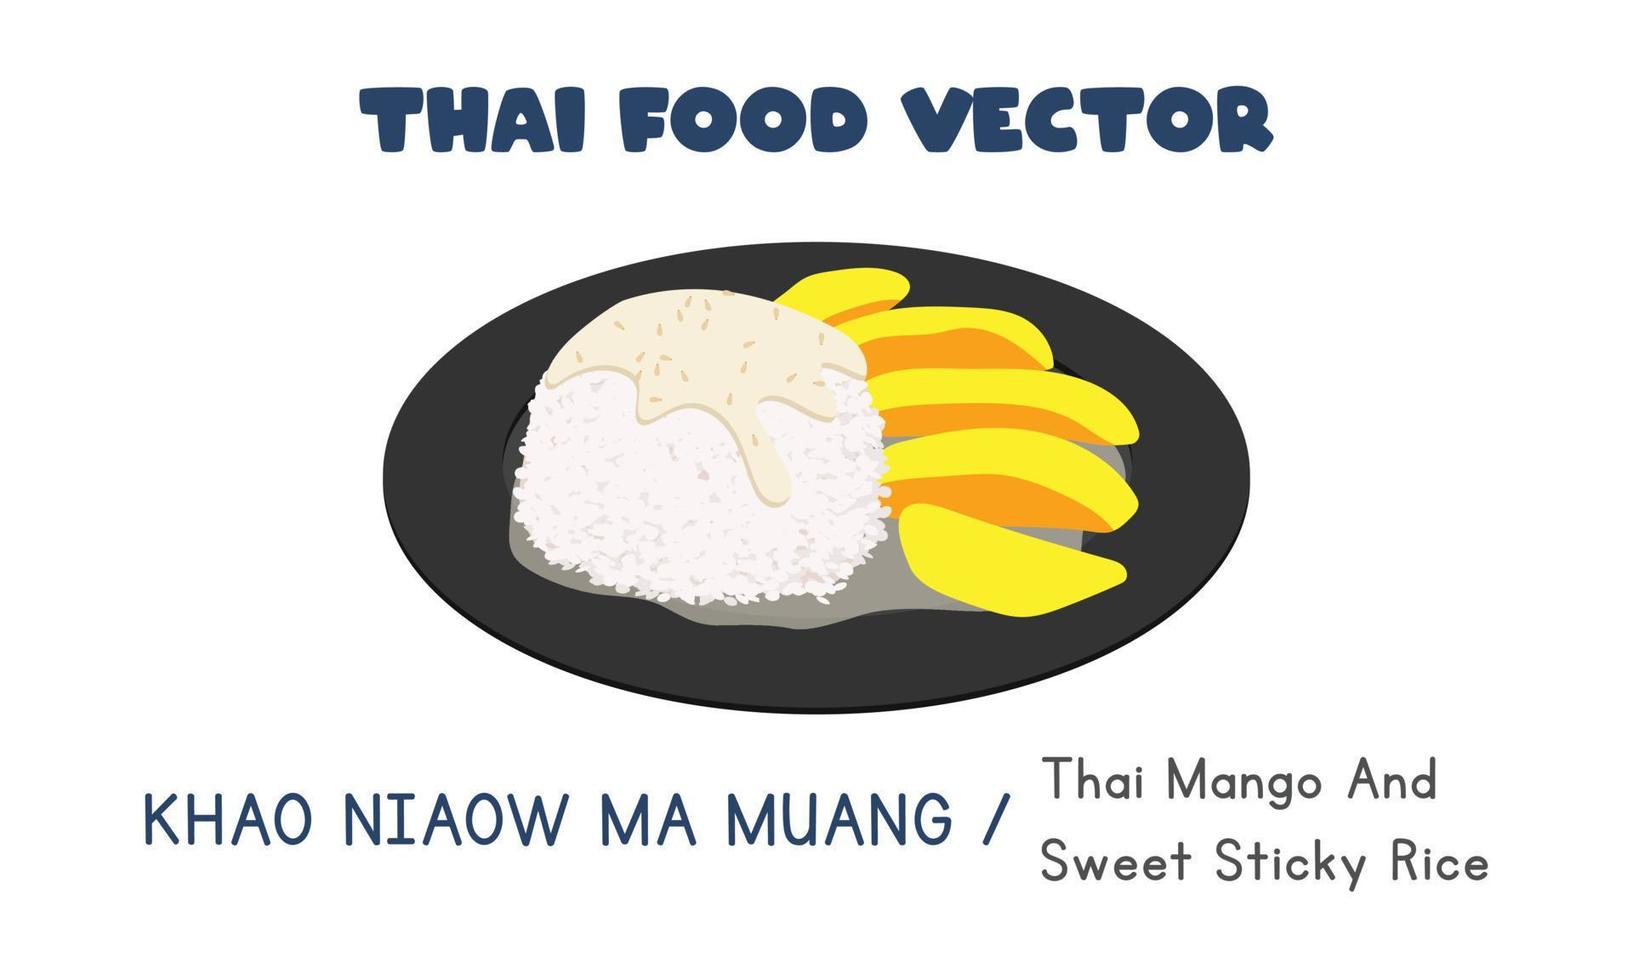 Thai Khao Niaow Ma Muang - Thai Mango and Sweet Sticky Rice and Coconut Milk flat vector clipart cartoon. Asian food. Thai cuisine. Thai local food